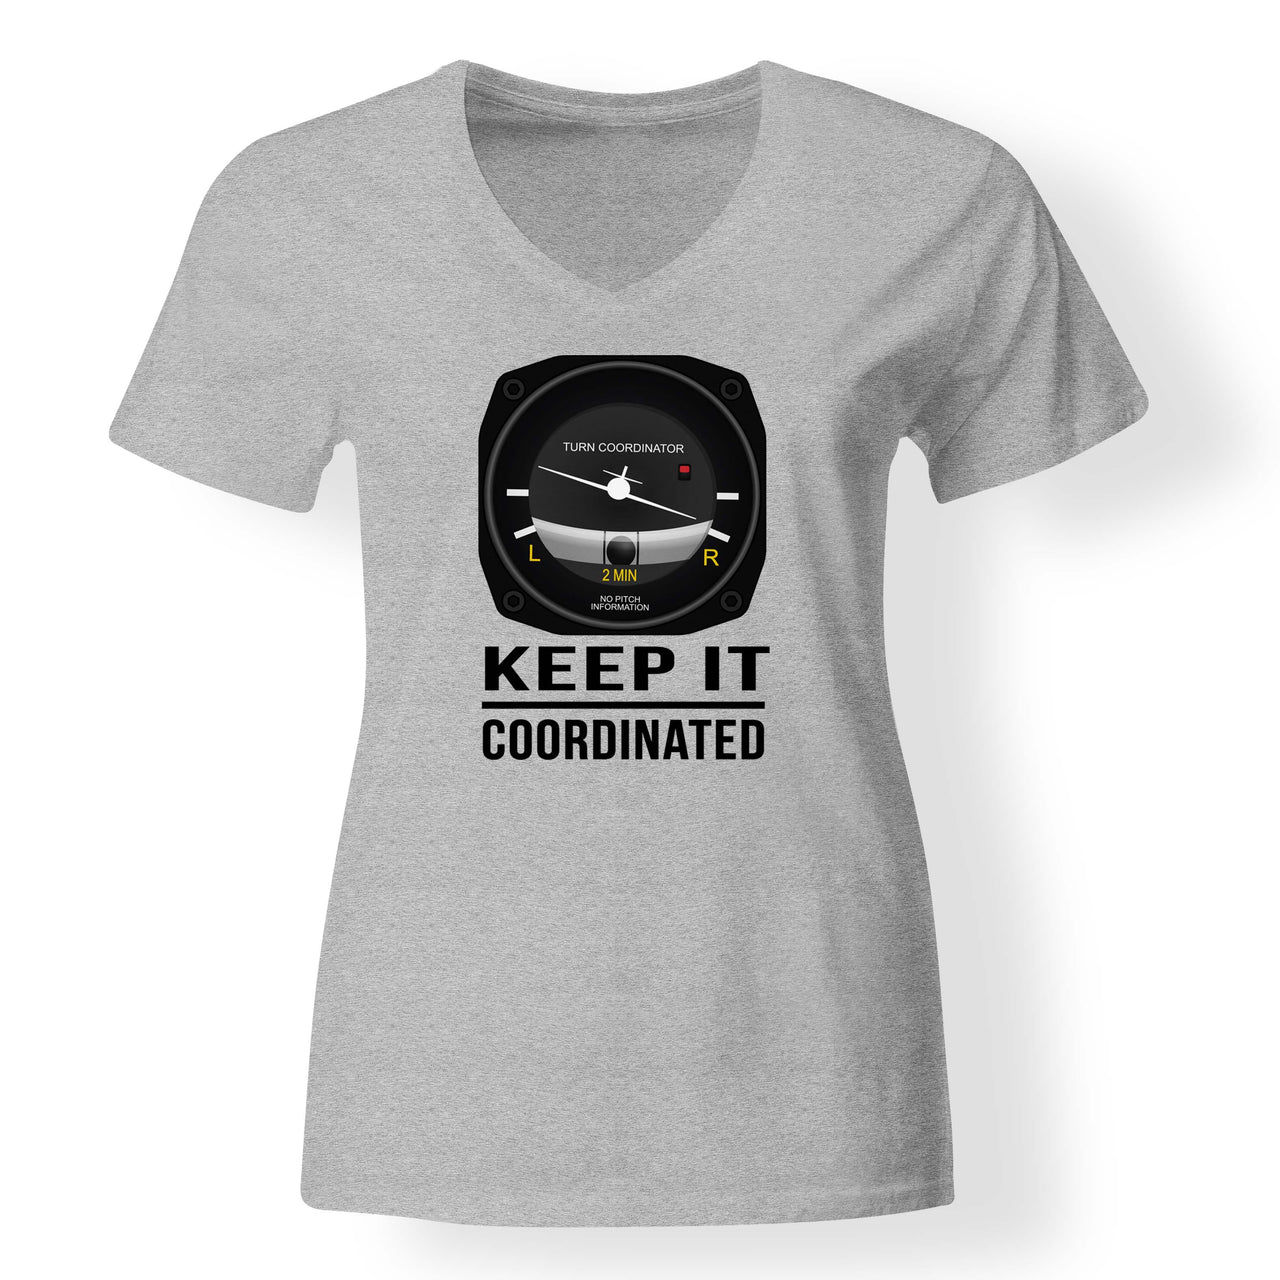 Keep It Coordinated Designed V-Neck T-Shirts